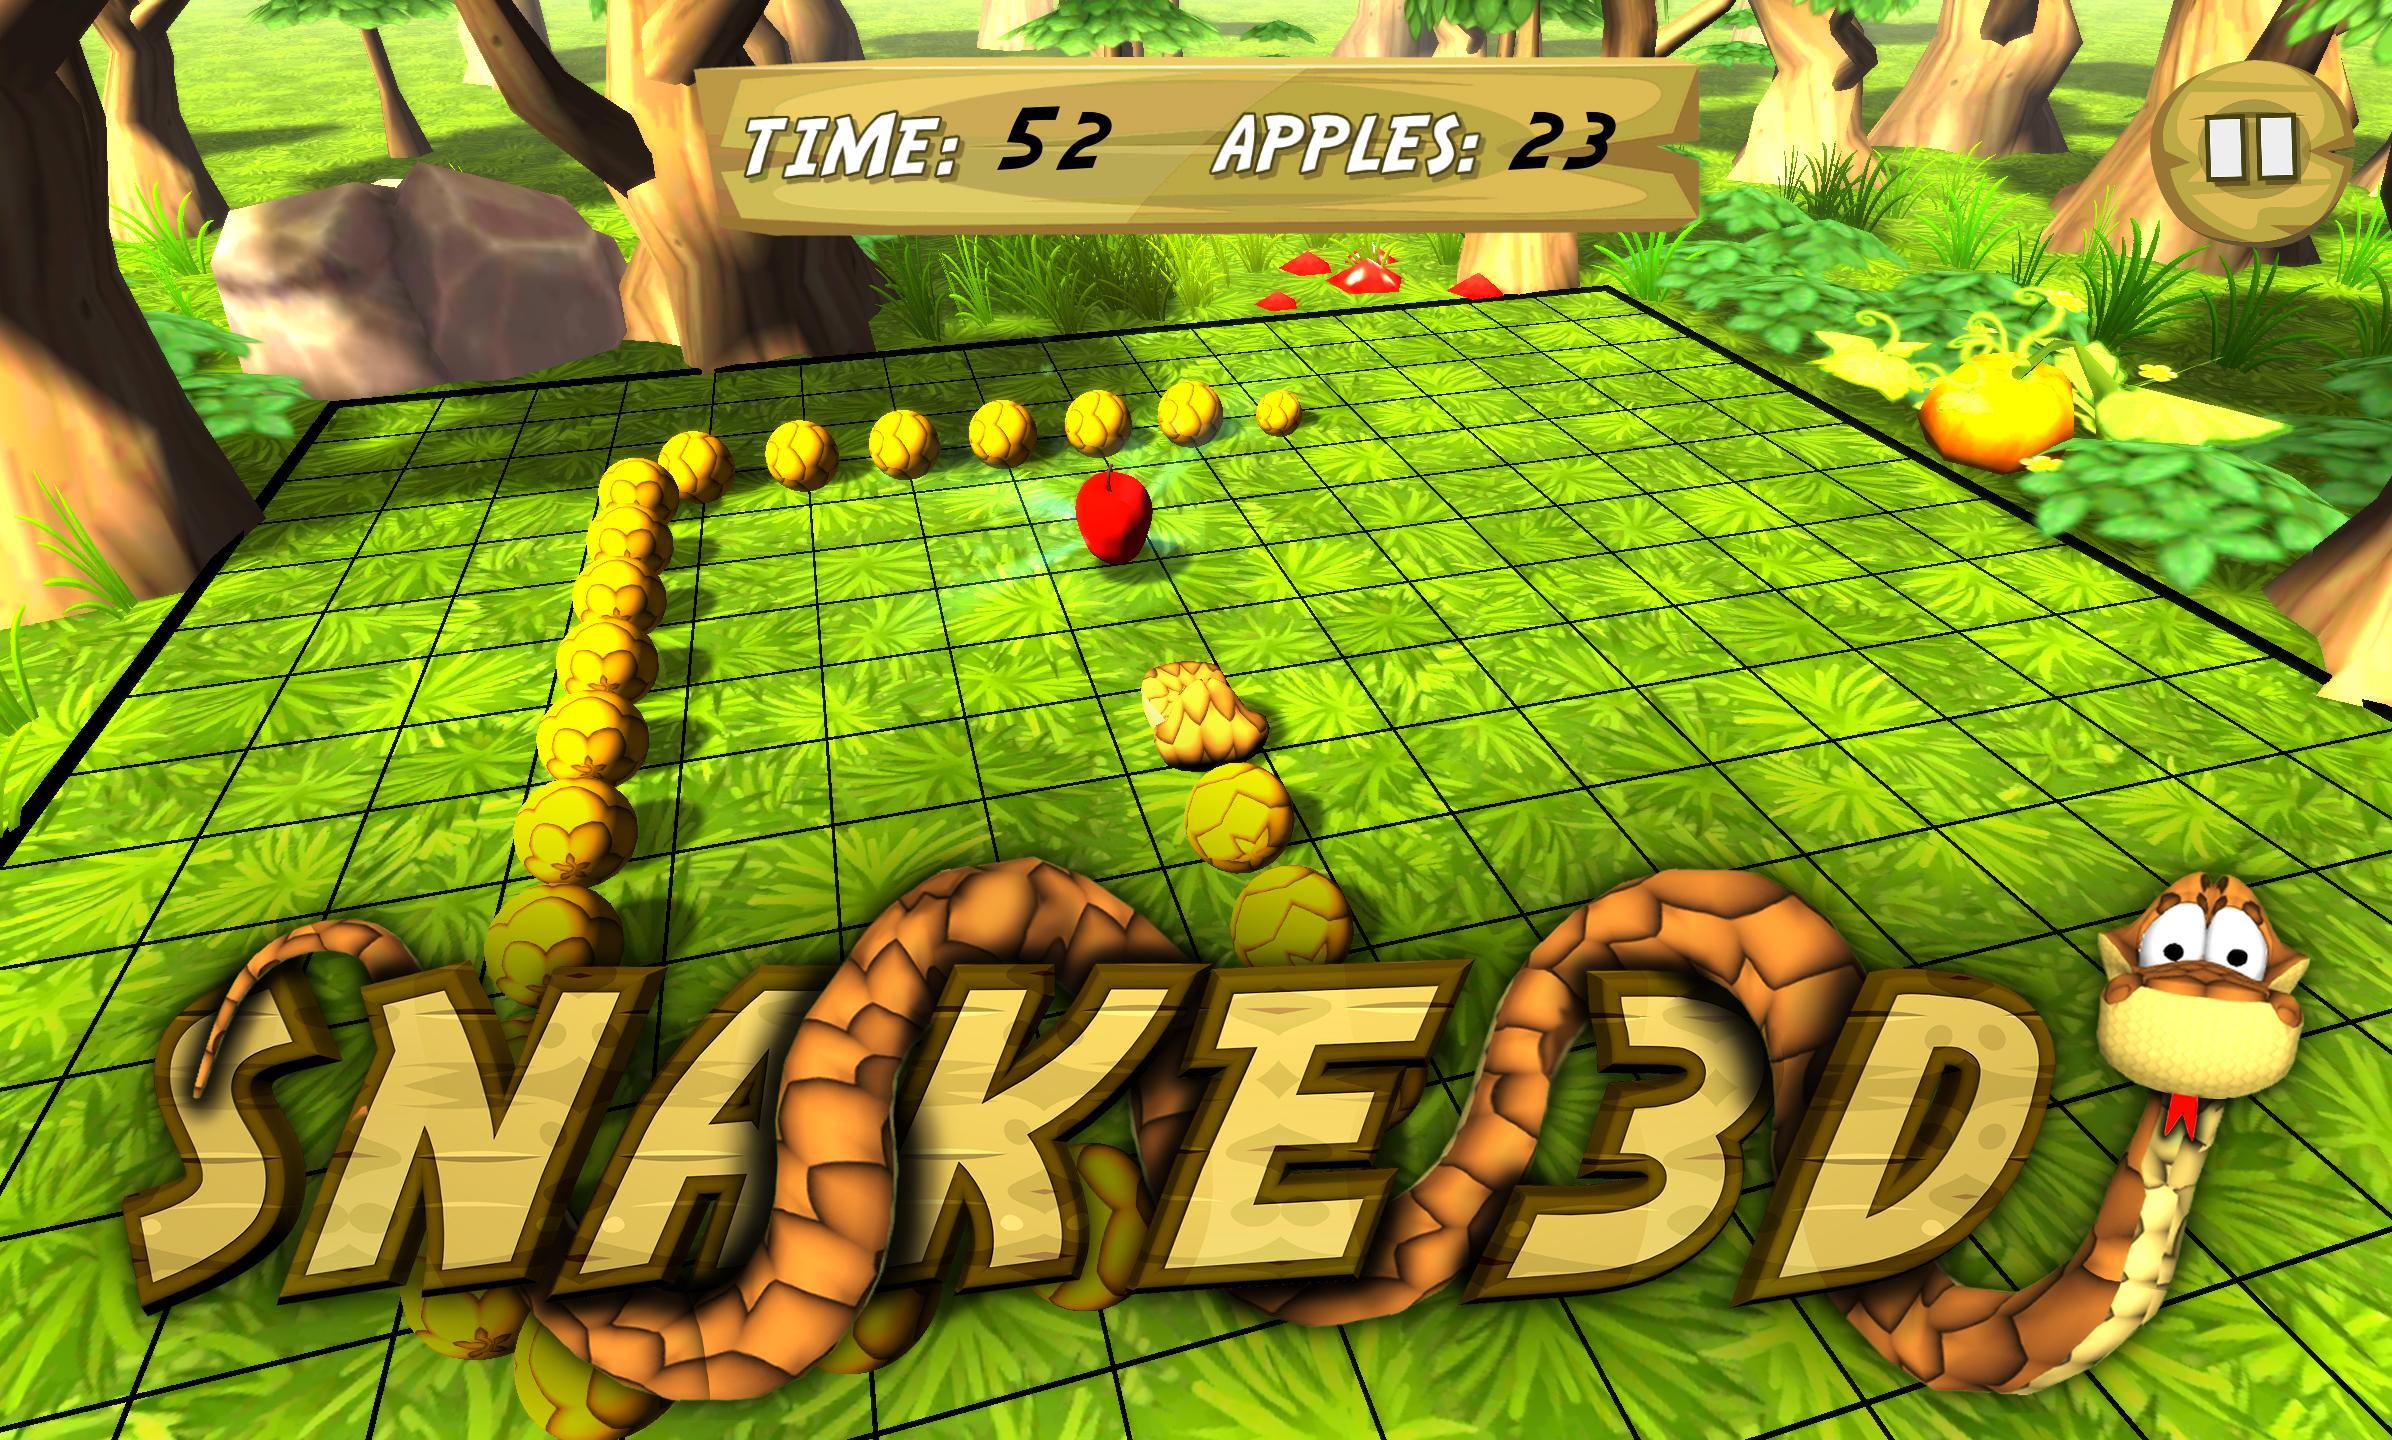 Игра змейка 3. Игра Snake 3. Java игра Snakes 3d. Змейка 3д java. Змейка 3d (Snake 3d).